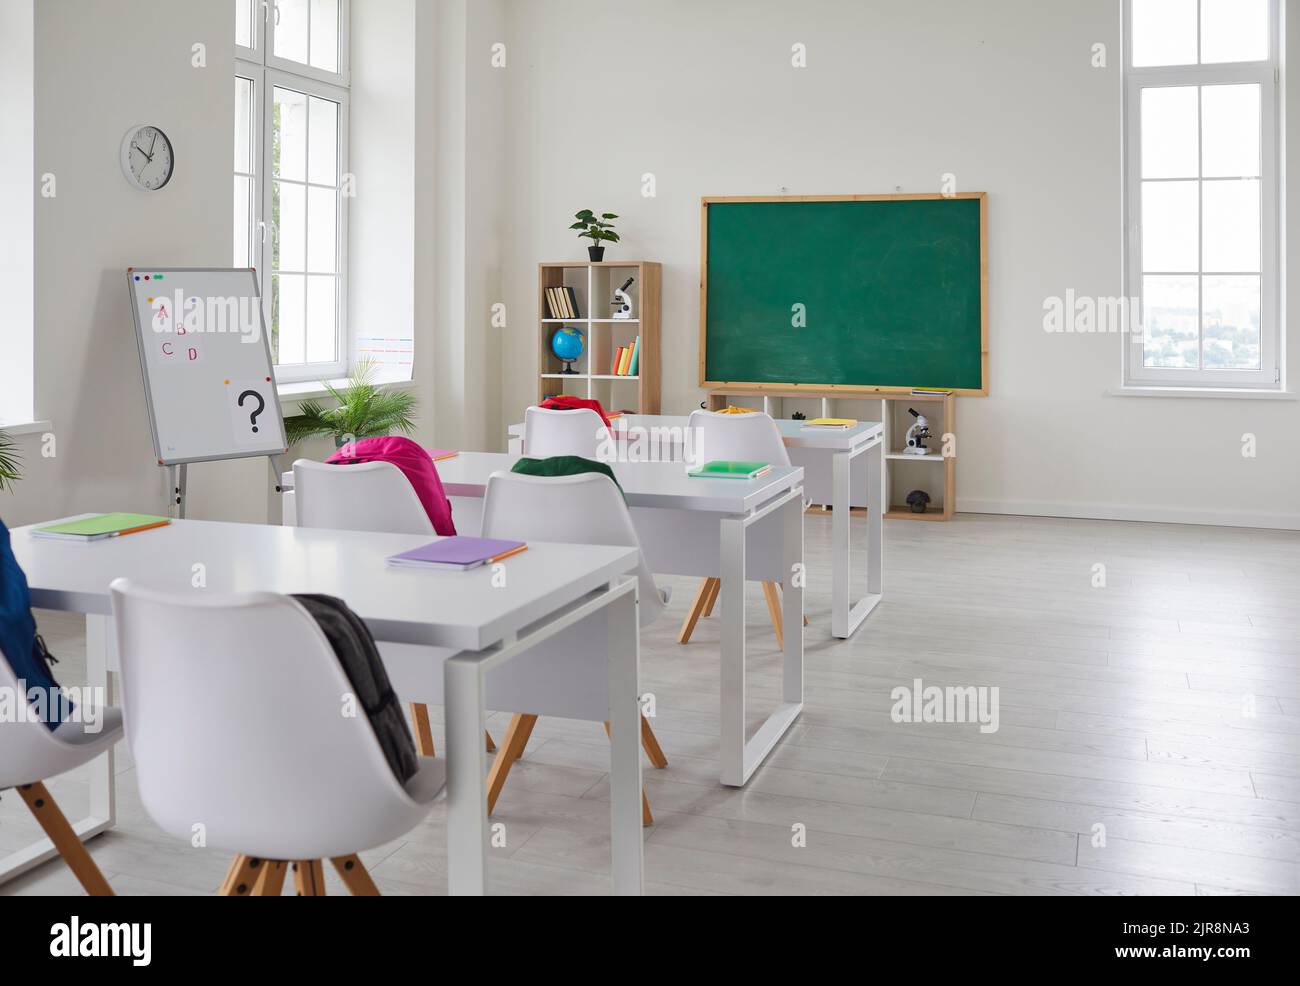 Mobiliario escolar fotografías e imágenes de alta resolución - Alamy